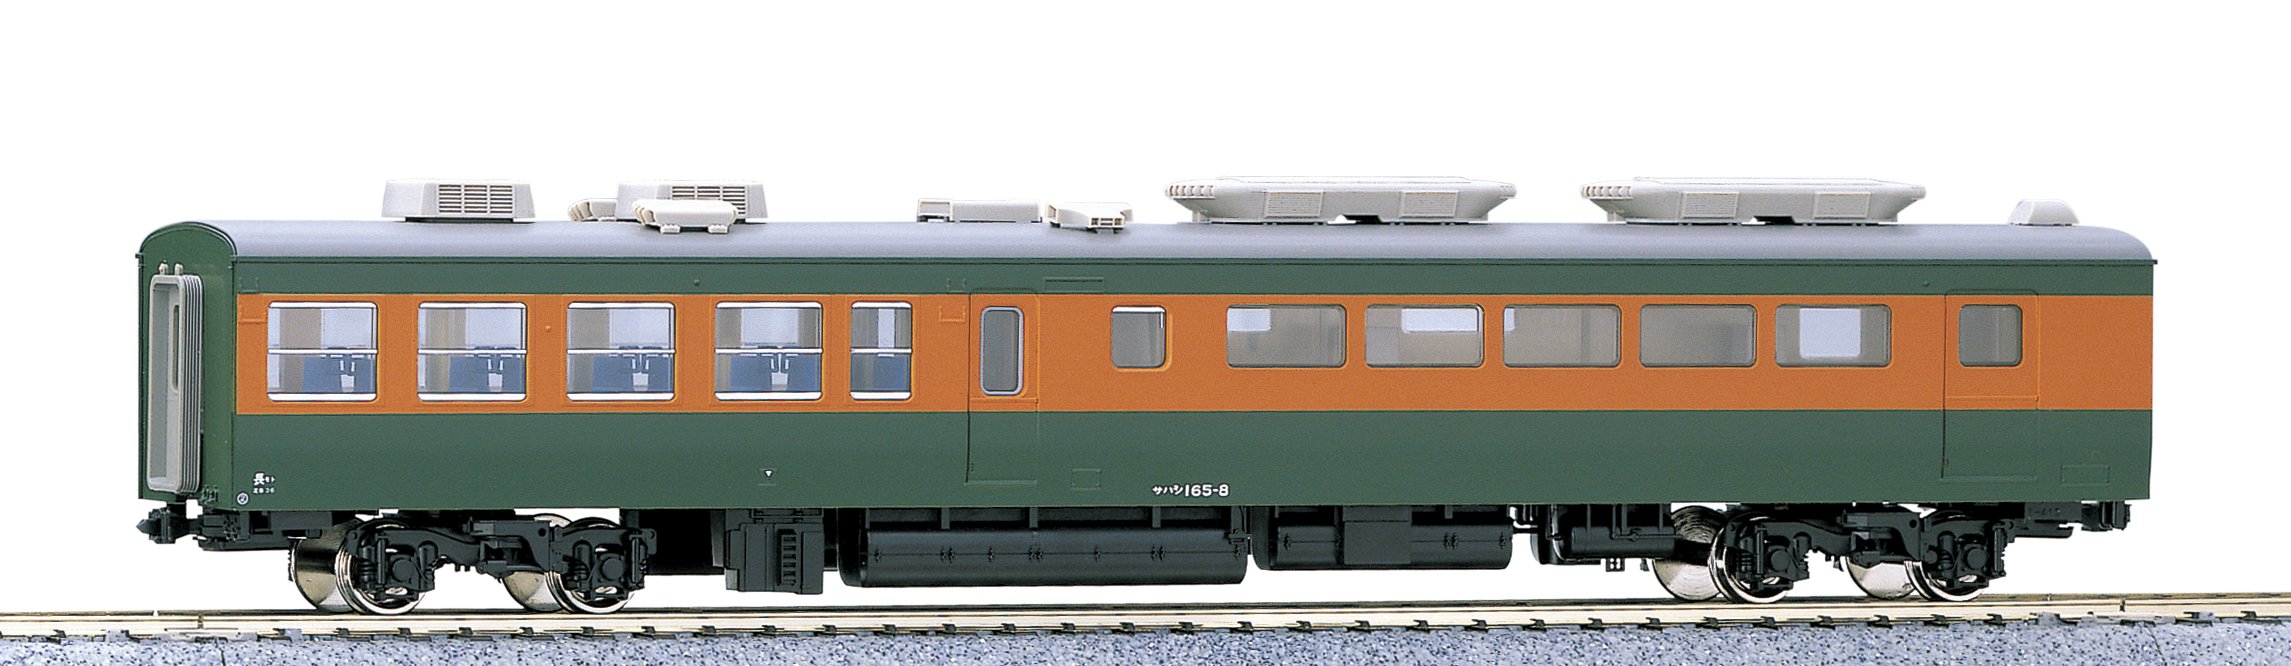 Kato Ho Gauge 165 Sahashi 1-418 Model Railway Train